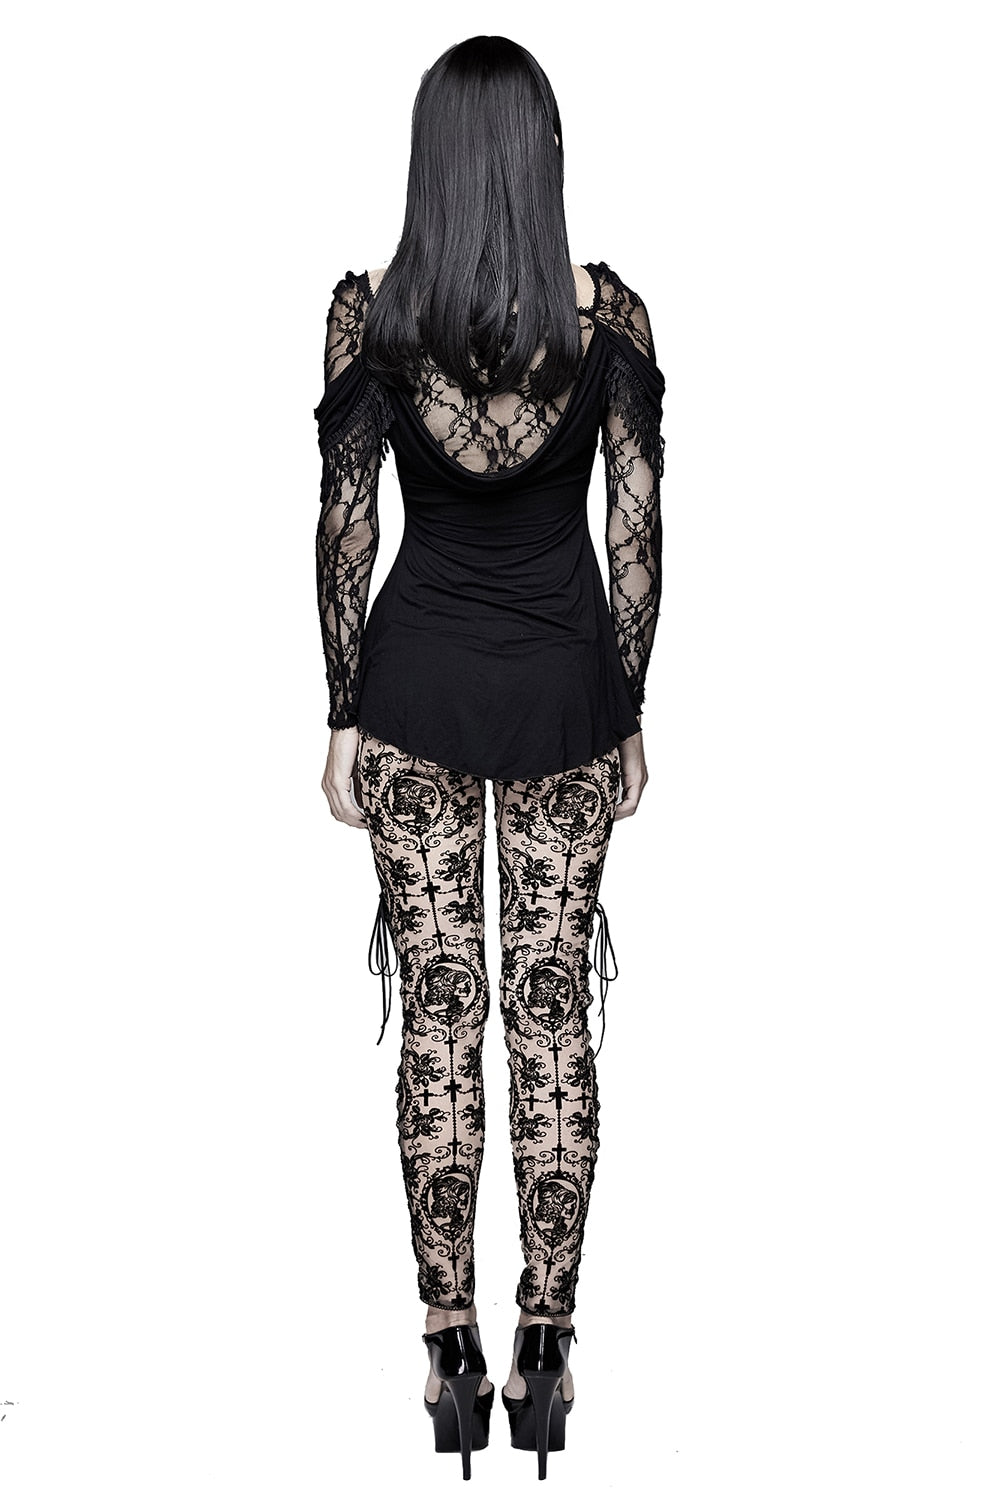 The Lace Cameo Leggings  Sheer leggings, Lace, Romantic goth